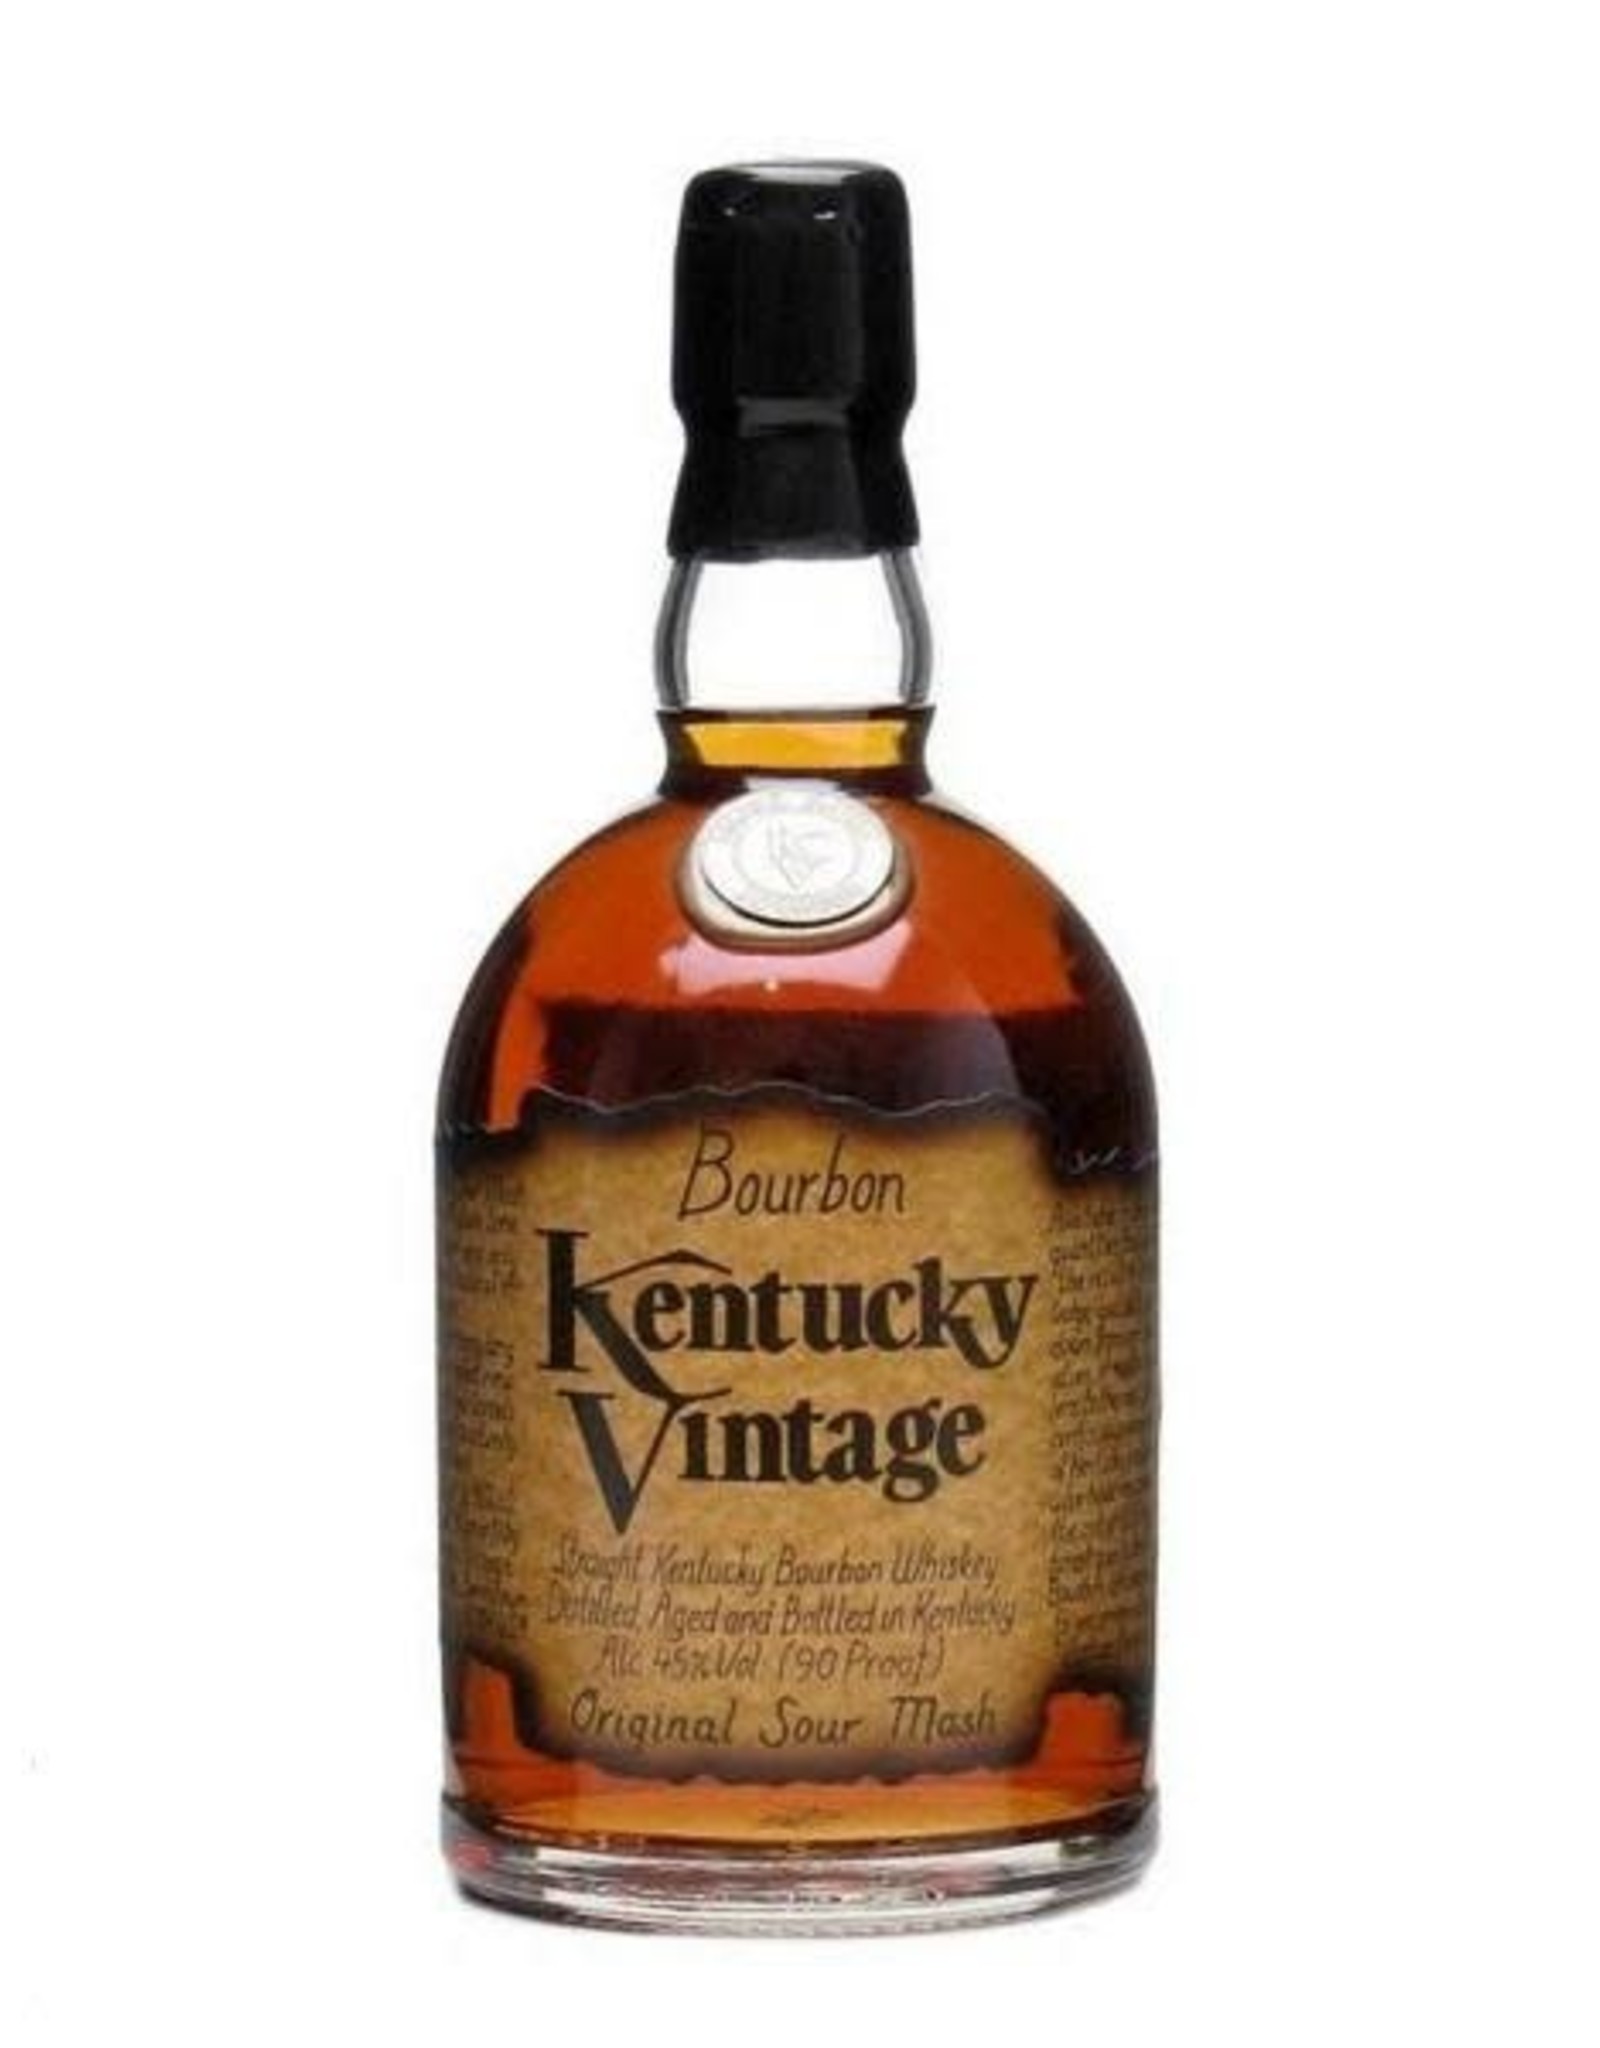 Kentucky Vintage kentucky Vintage Bourbon whiskey 750ml 90 Proof